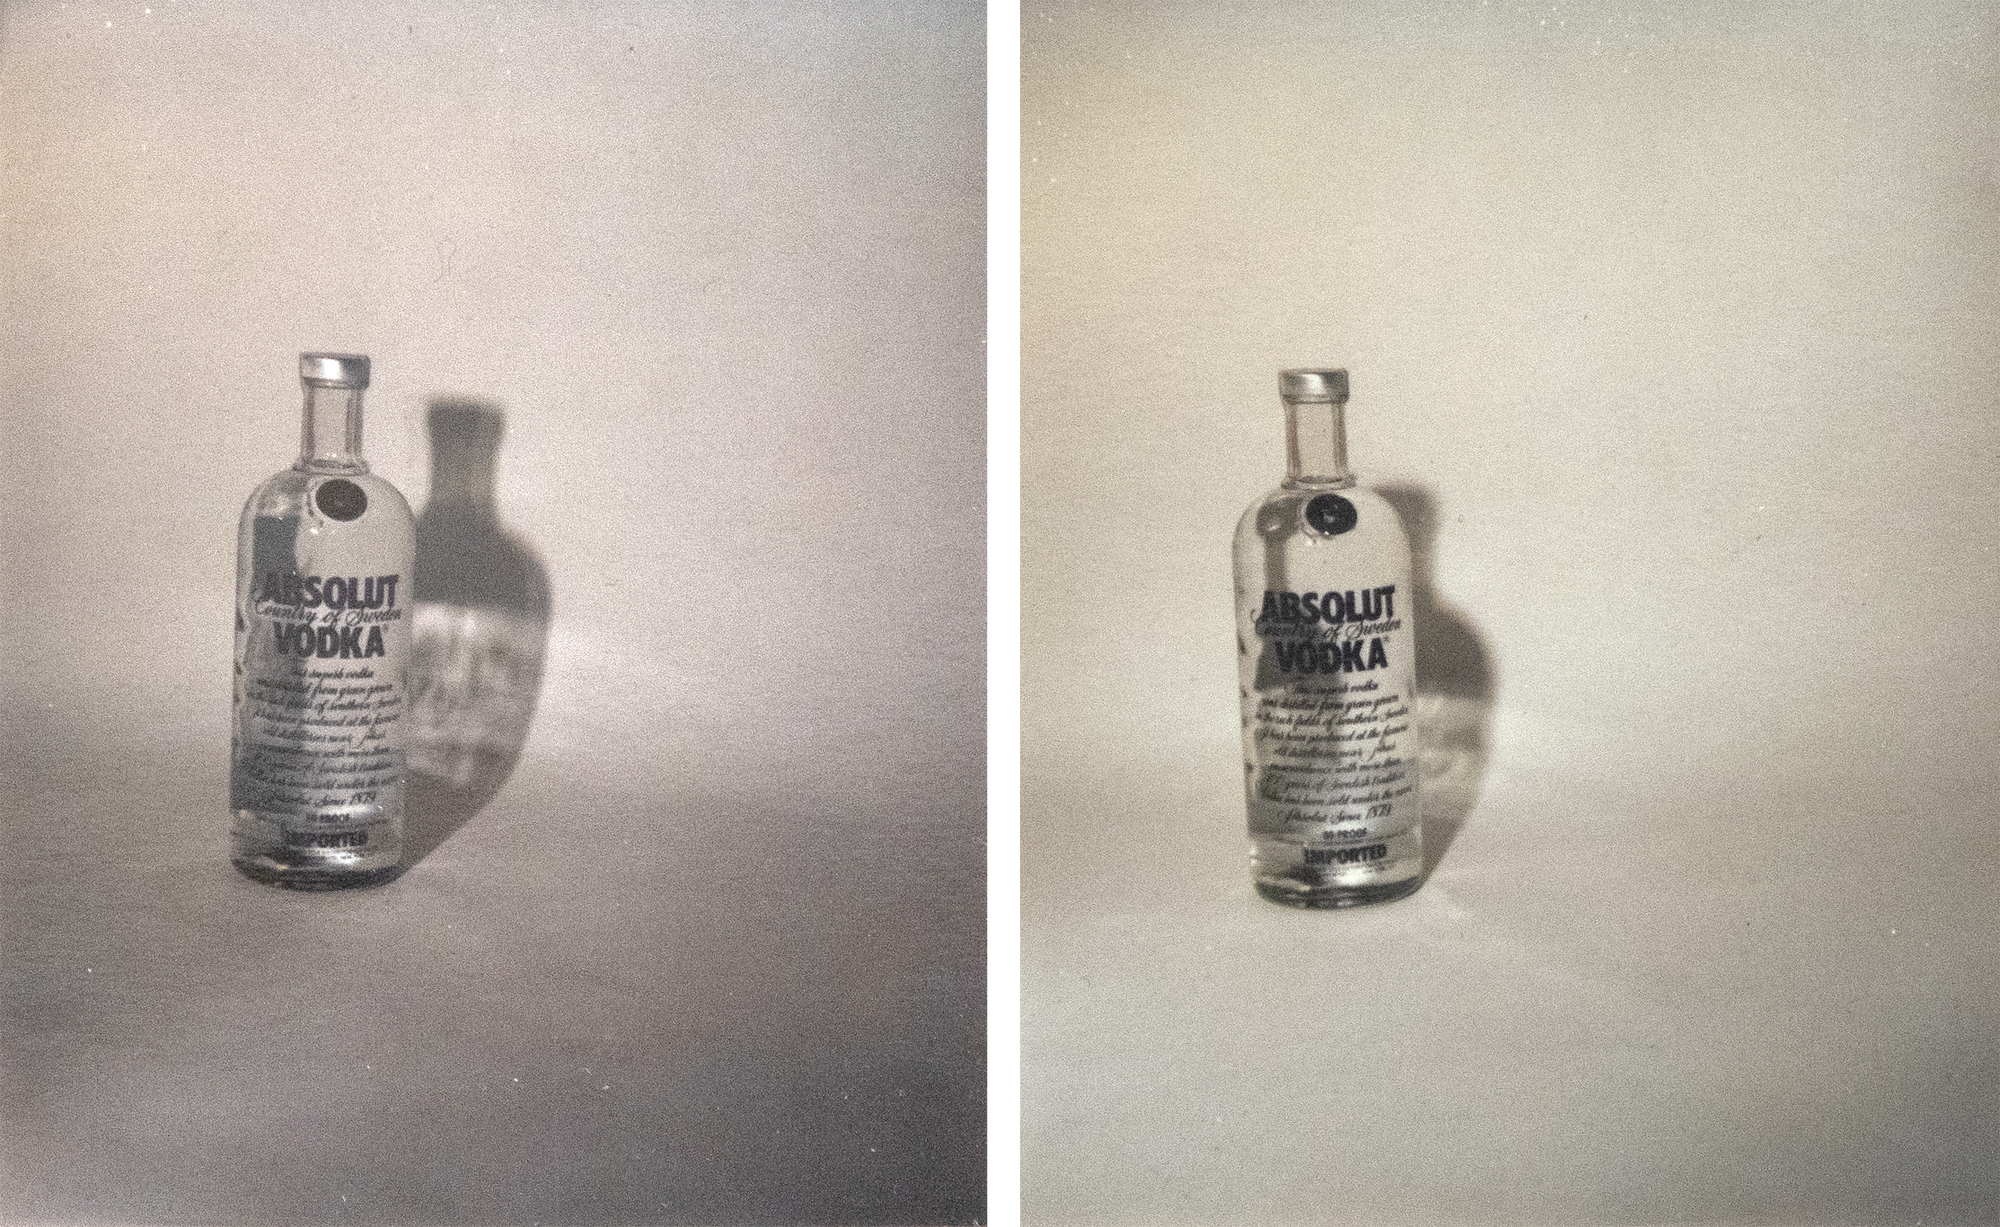 ANDY WARHOL - Absolute Vodka - Polaroid, Polacolor - 4 1/4 x 3 3/8 in. ea.